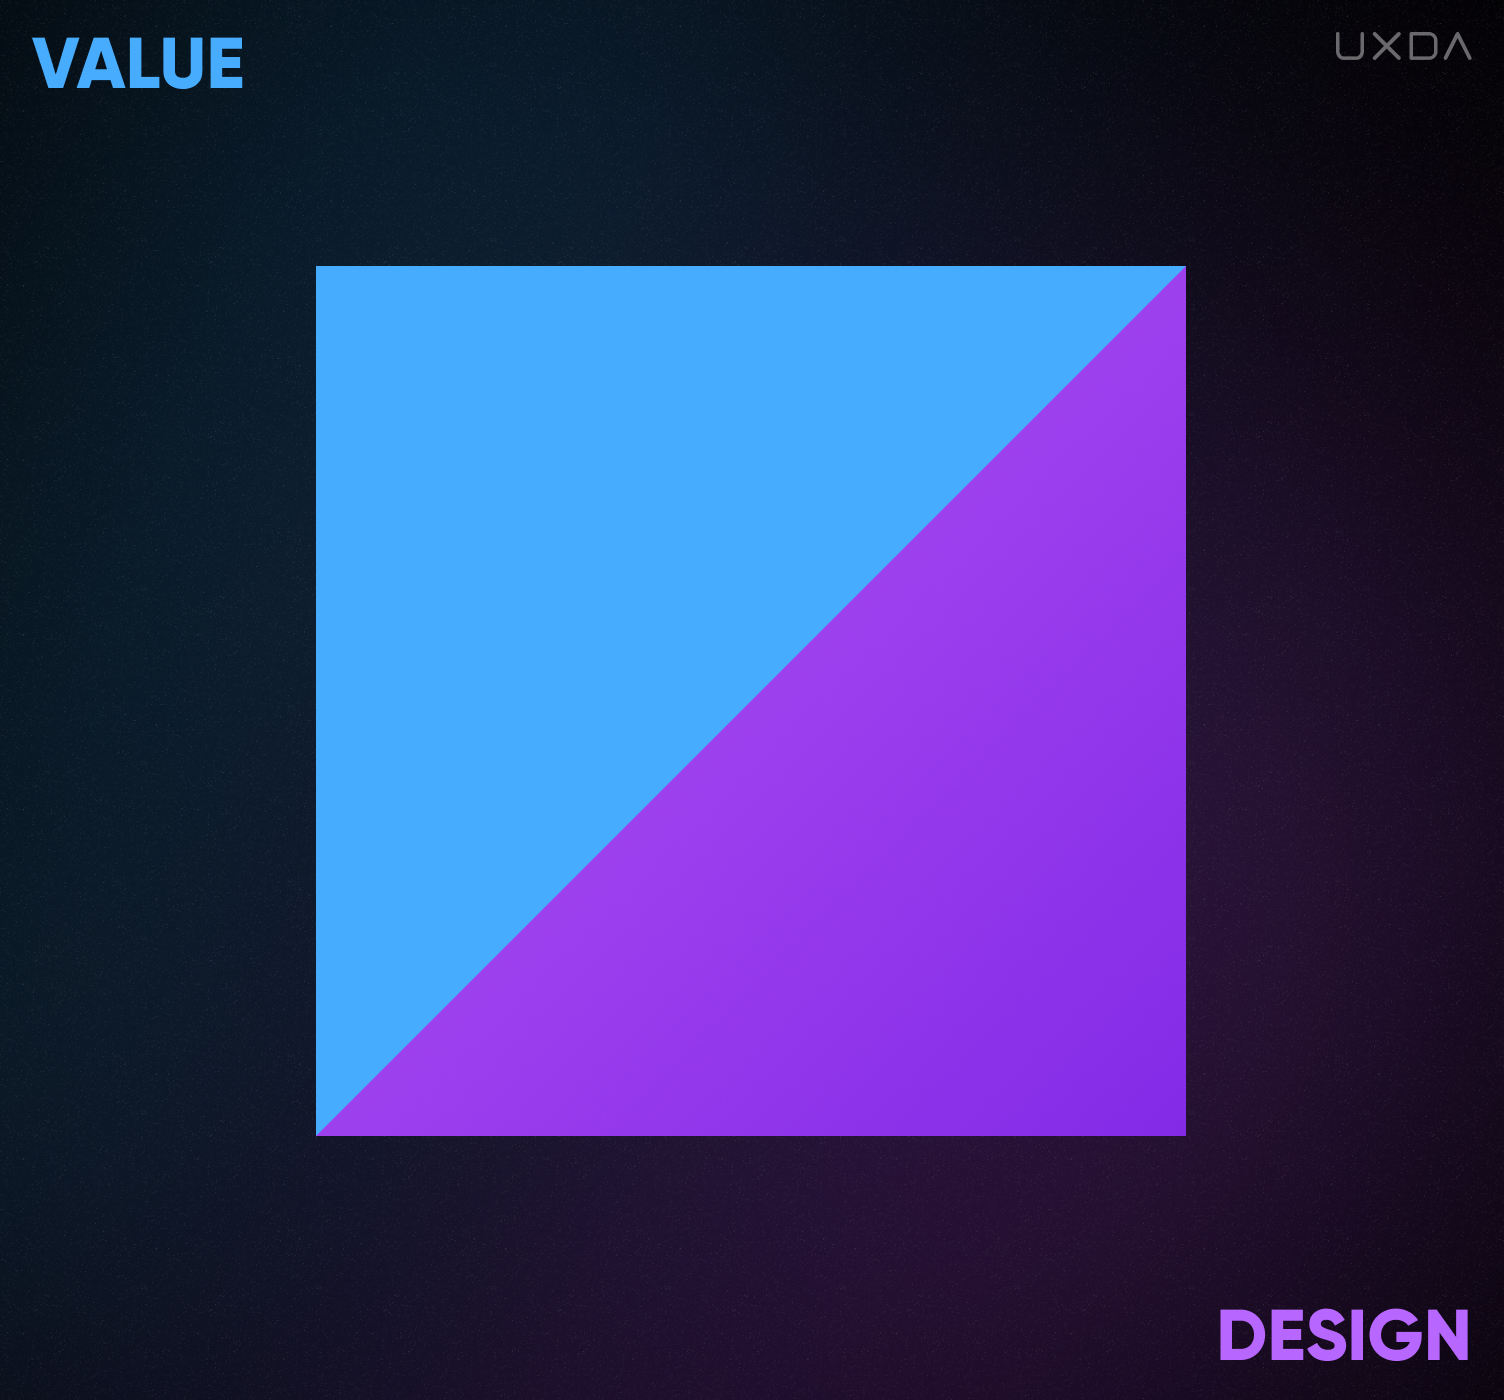 The UX Design Matrix Purpose-Driven Banking Culture Digital Disruption Value Design